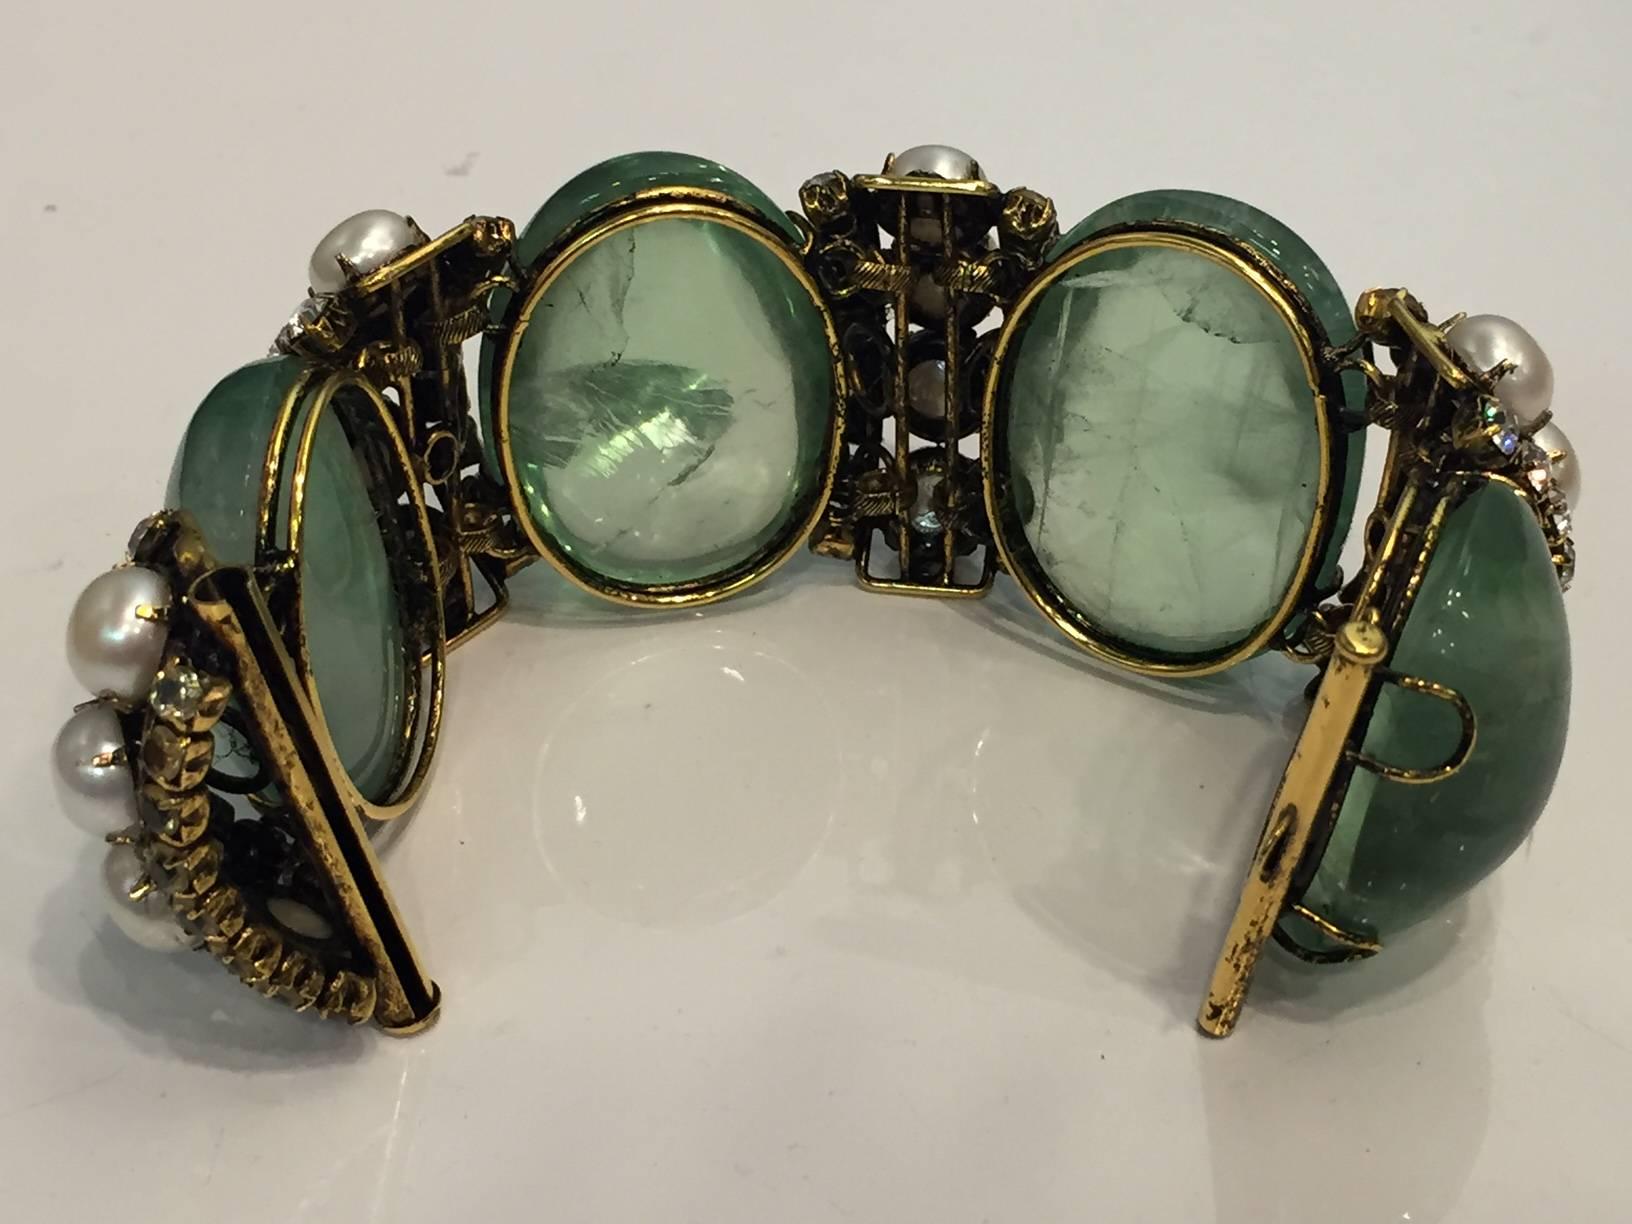 Iradj Moini Massive Bracelet with Green Cabochon Quartz  Pearls and Topaz  2